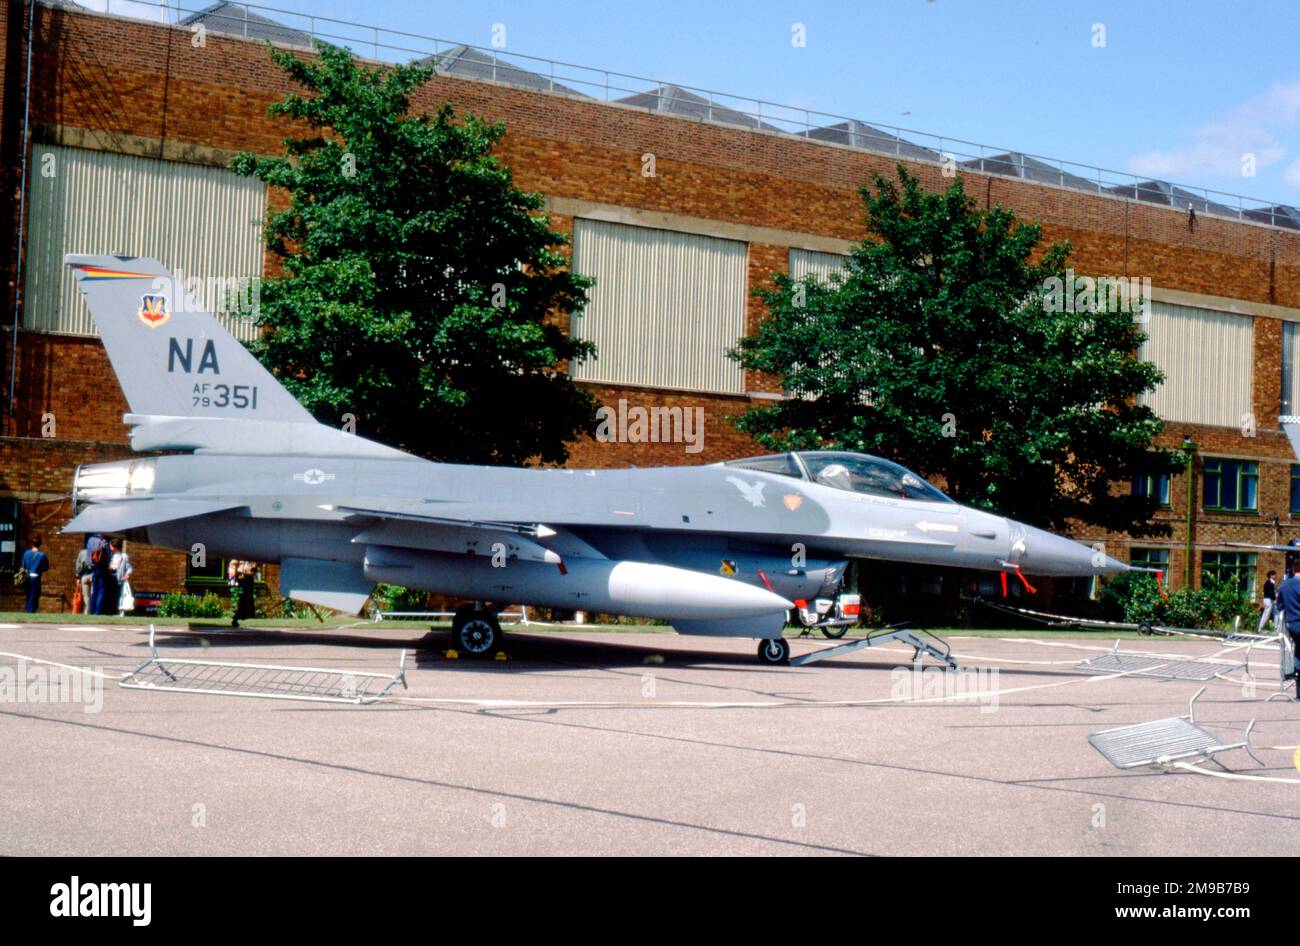 United States Air Force (USAF) - General Dynamics F-16A Block 10 Fighting Falcon 79-0351 (msn 6i-136, codice base 'Na'), al RAF Waddington Tactical Fighter Meet il 2 agosto 1986. Foto Stock